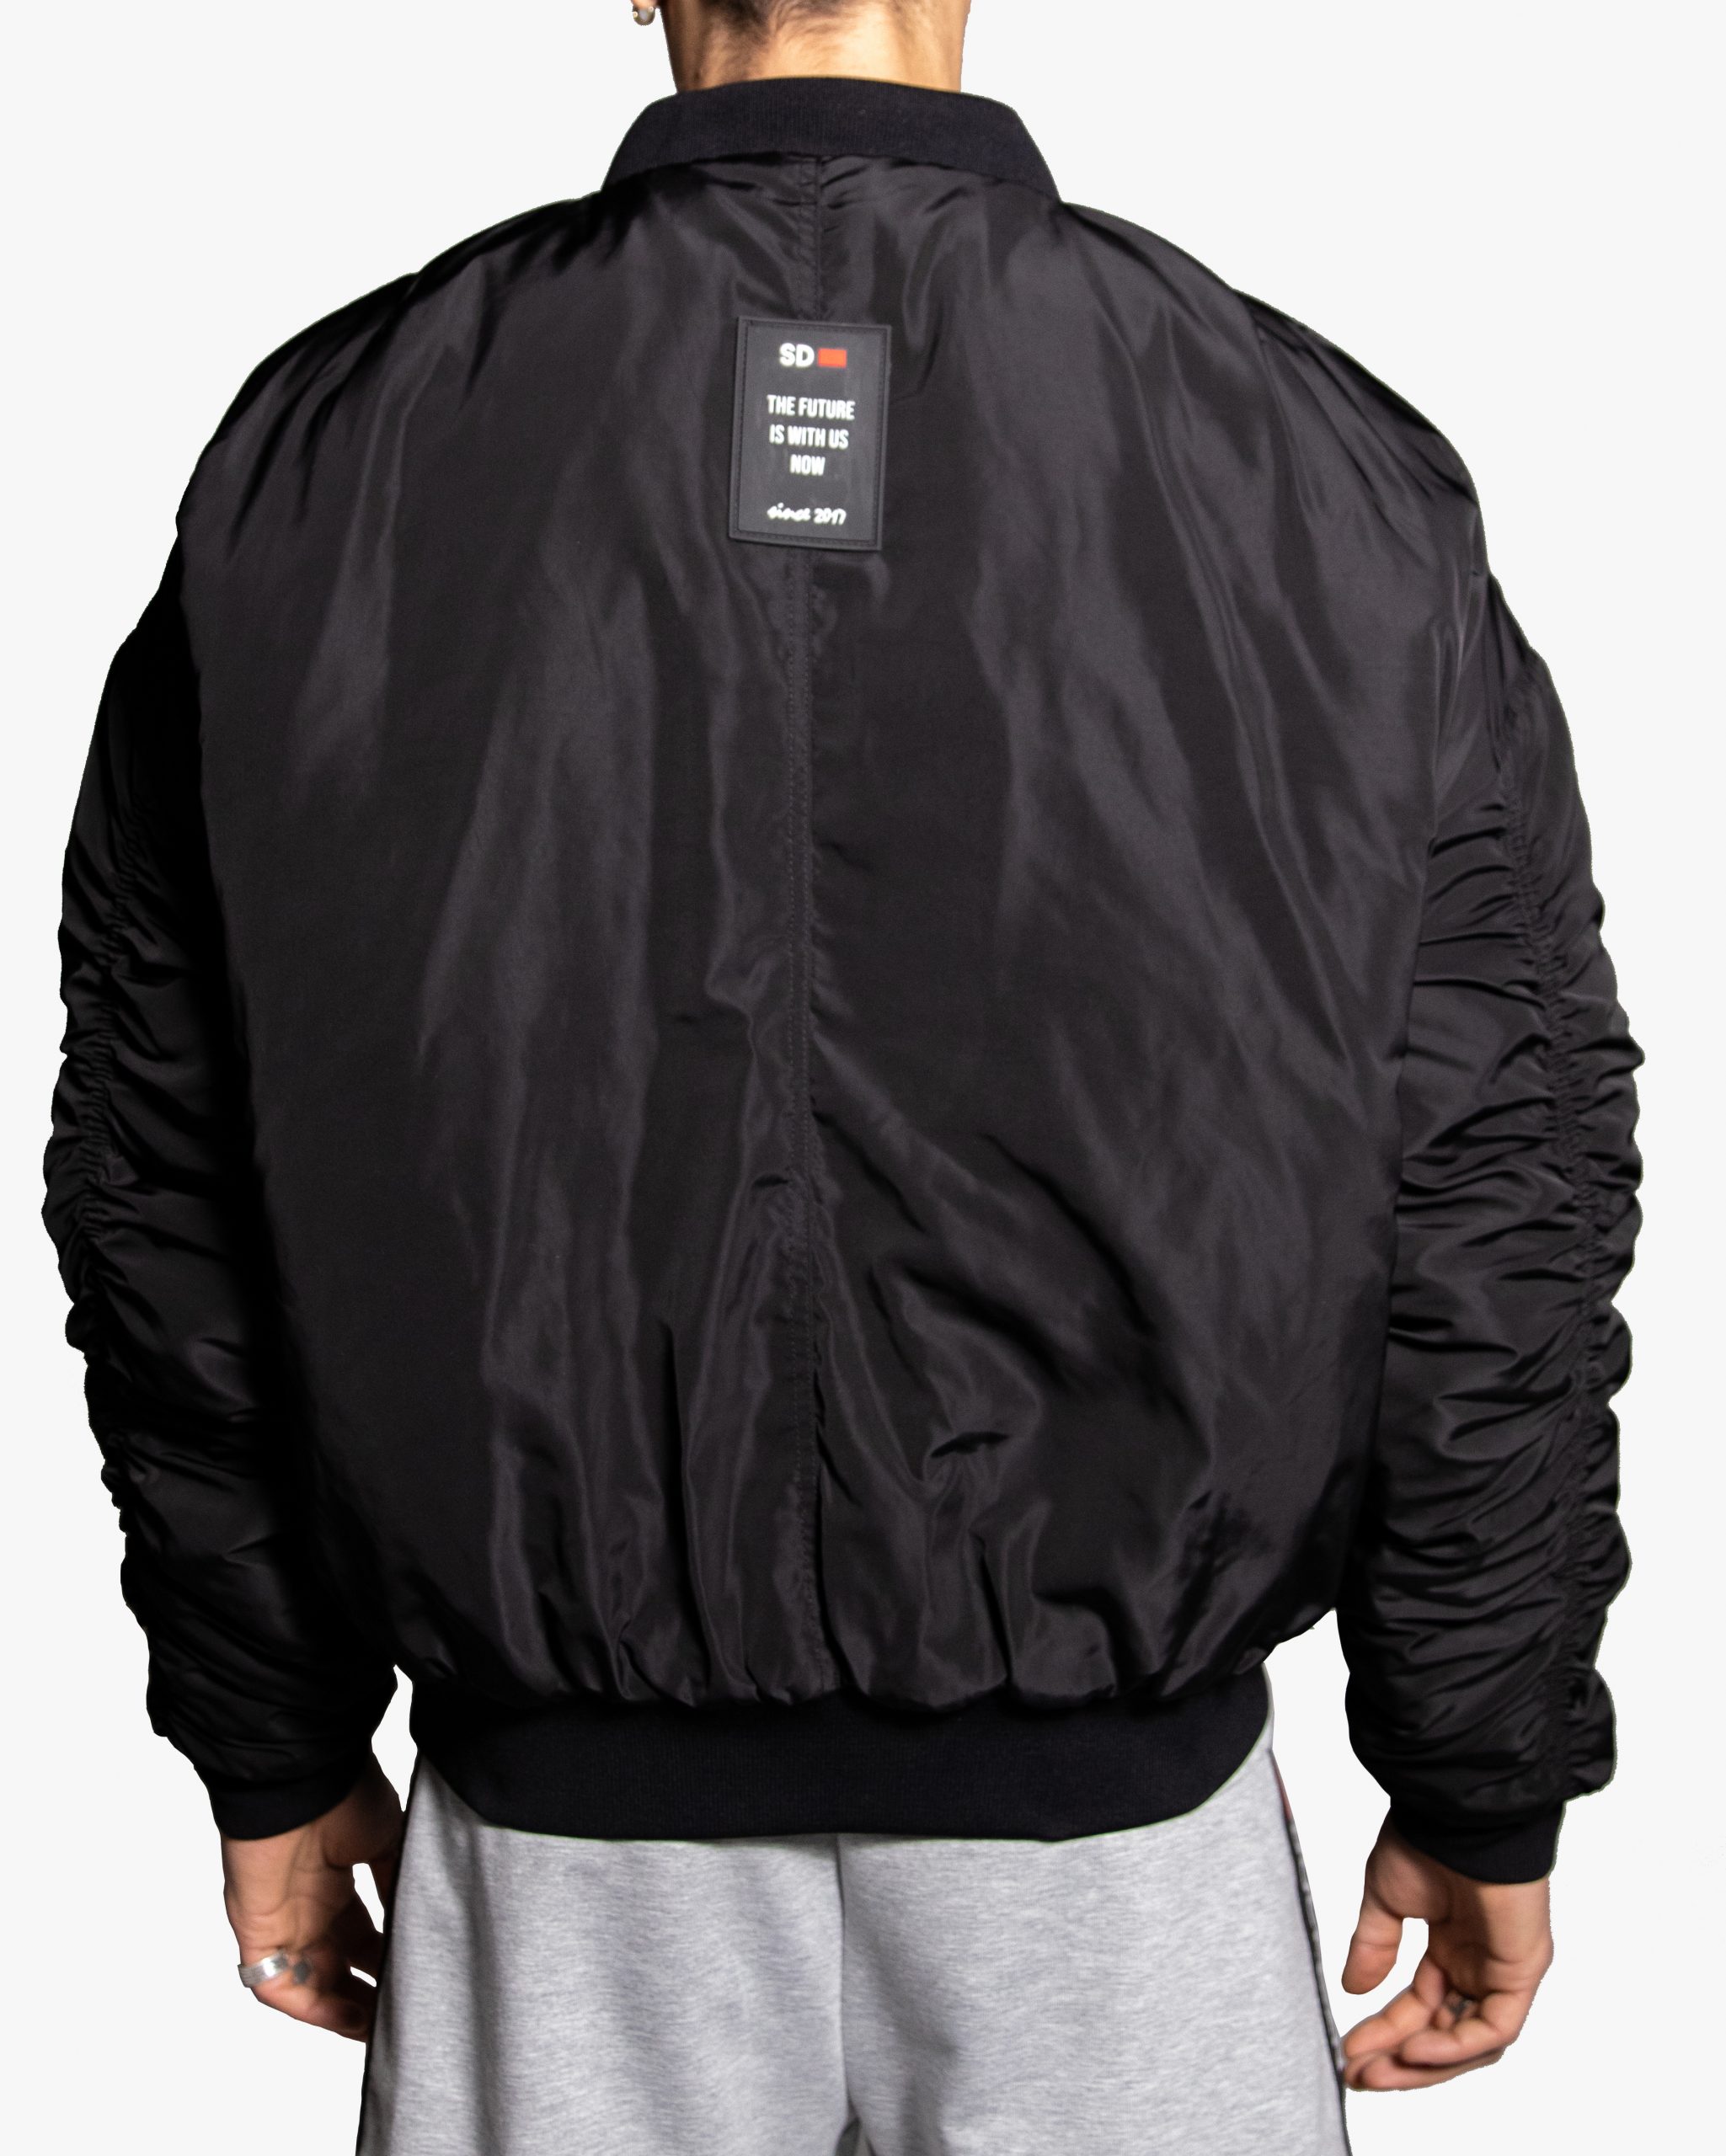 SD Bomber jacket - StevenDockman